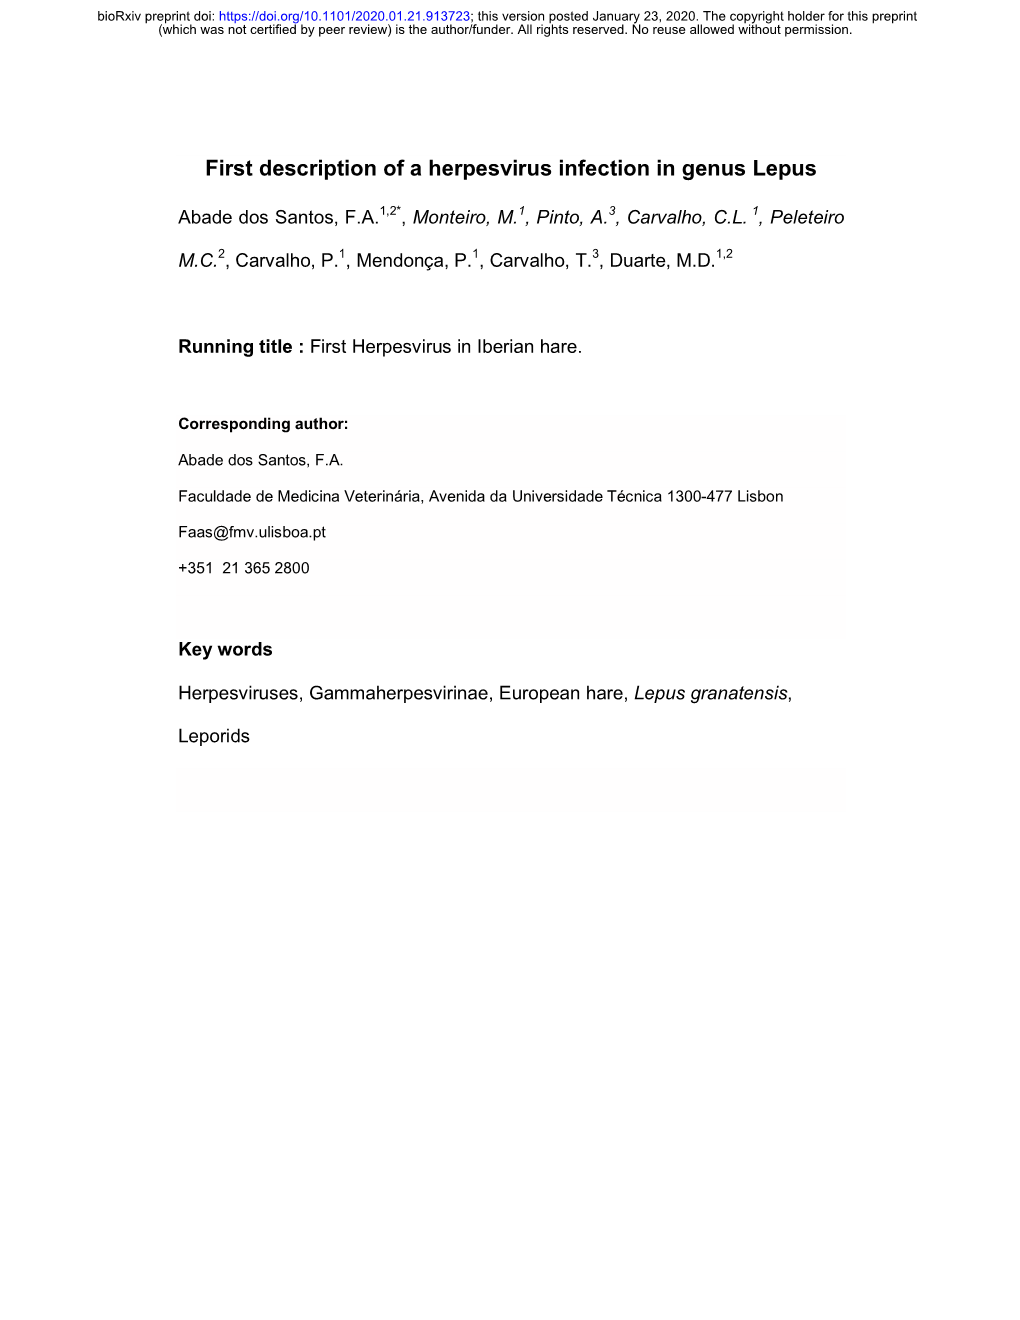 First Description of a Herpesvirus Infection in Genus Lepus